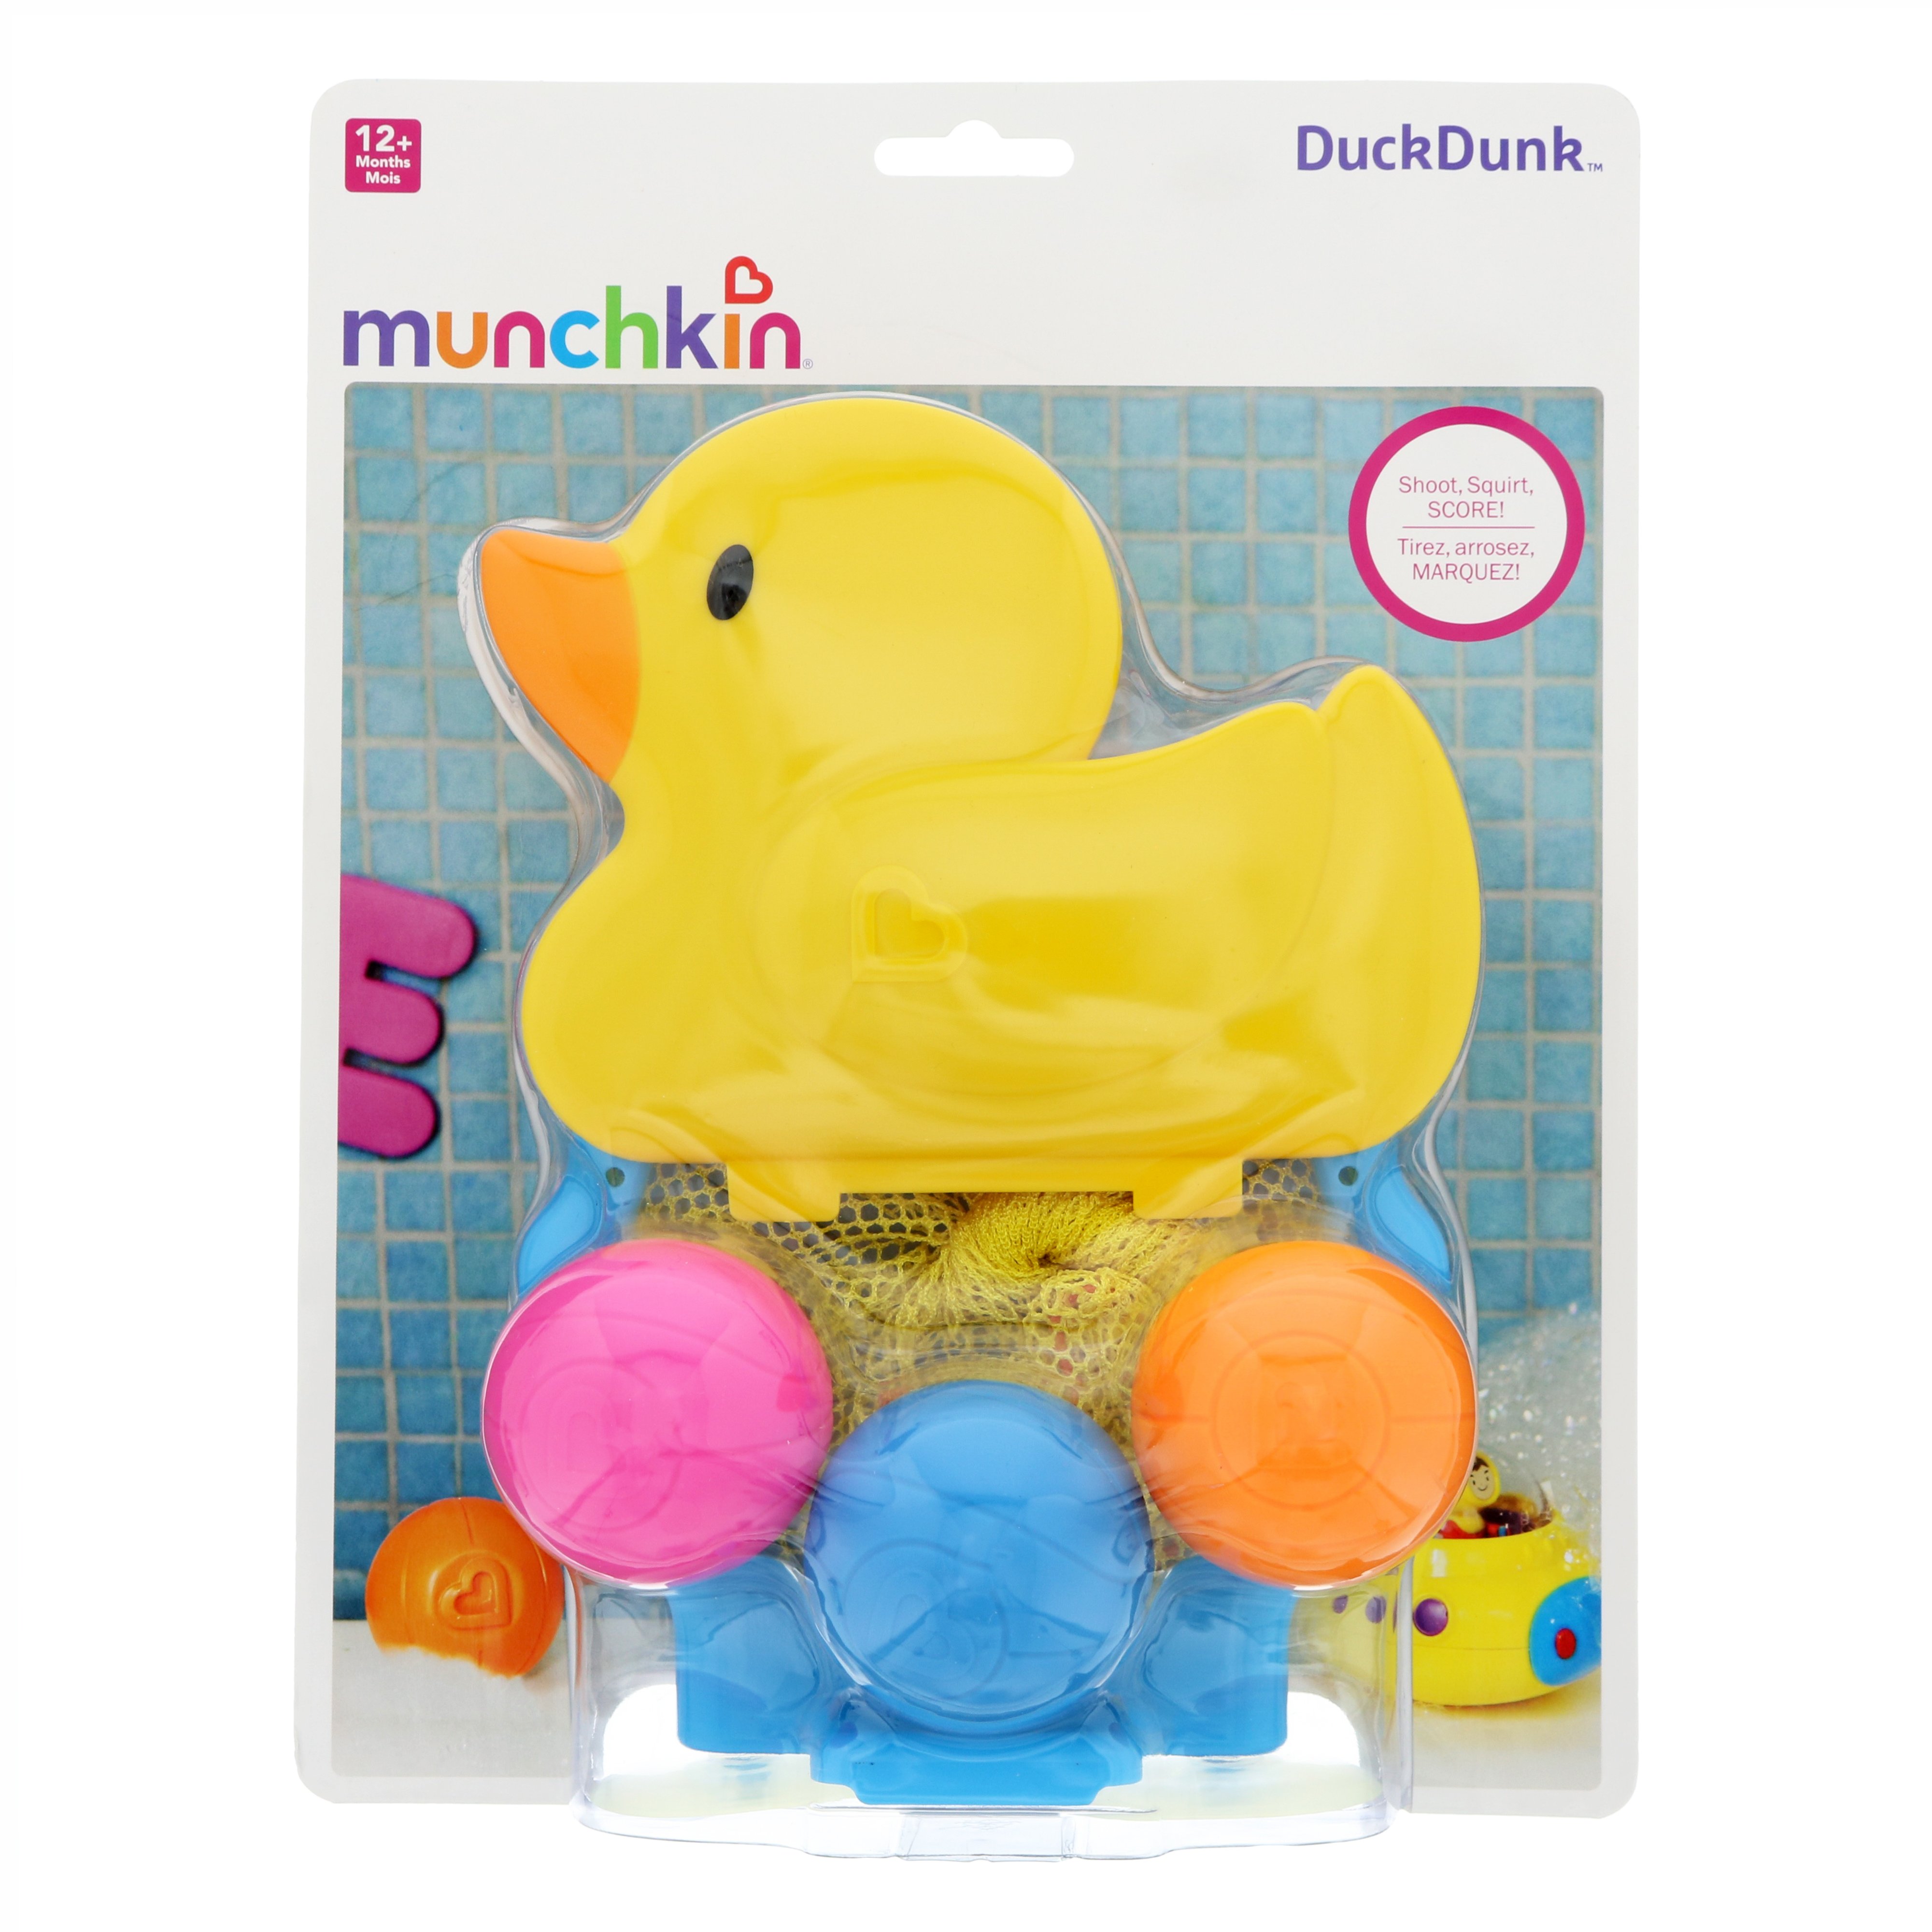 munchkin toy